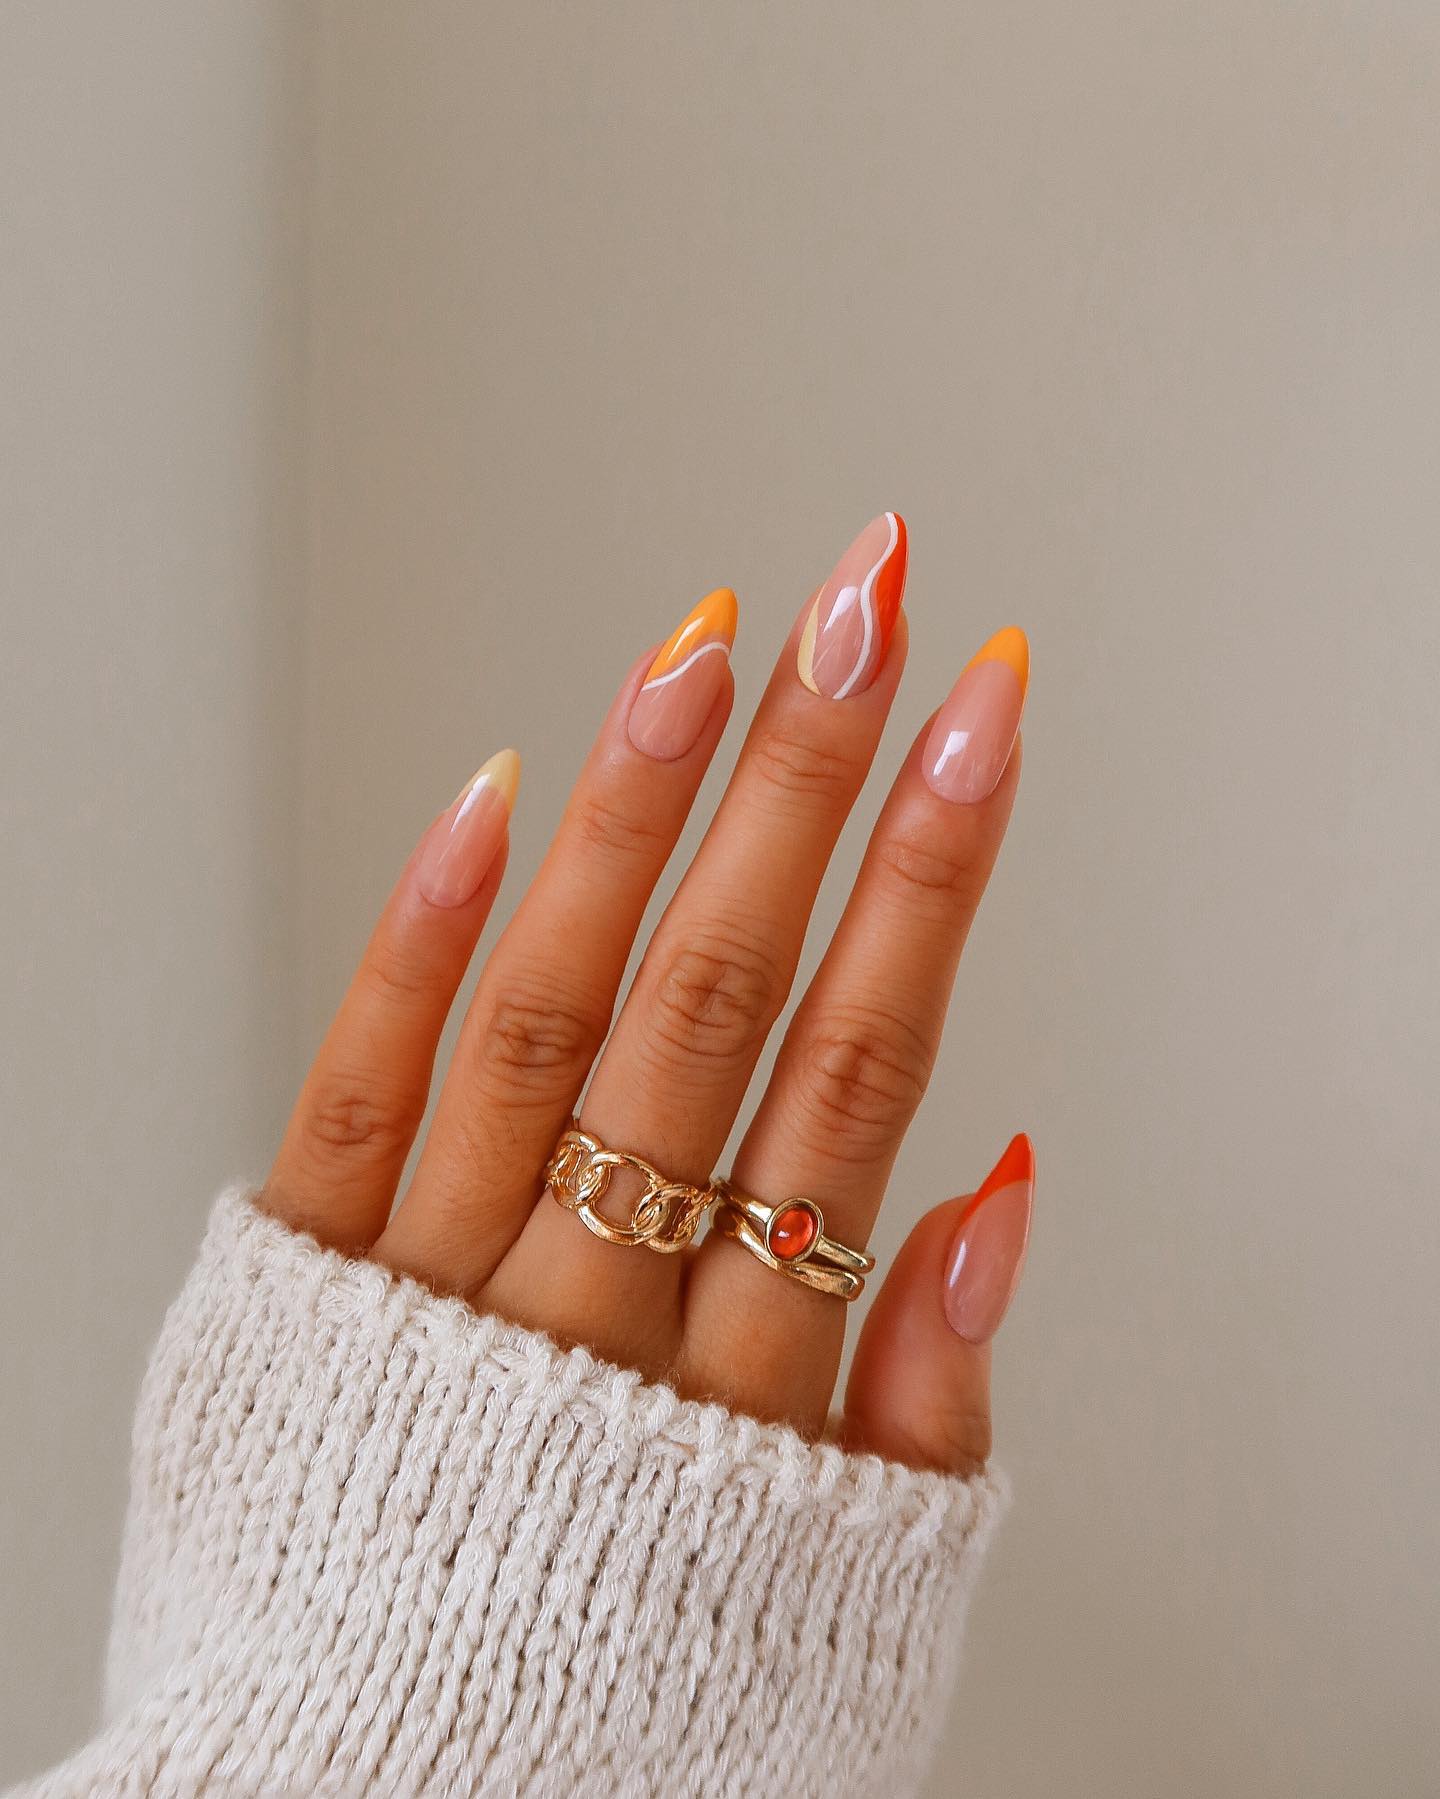 Spring orange almond nails